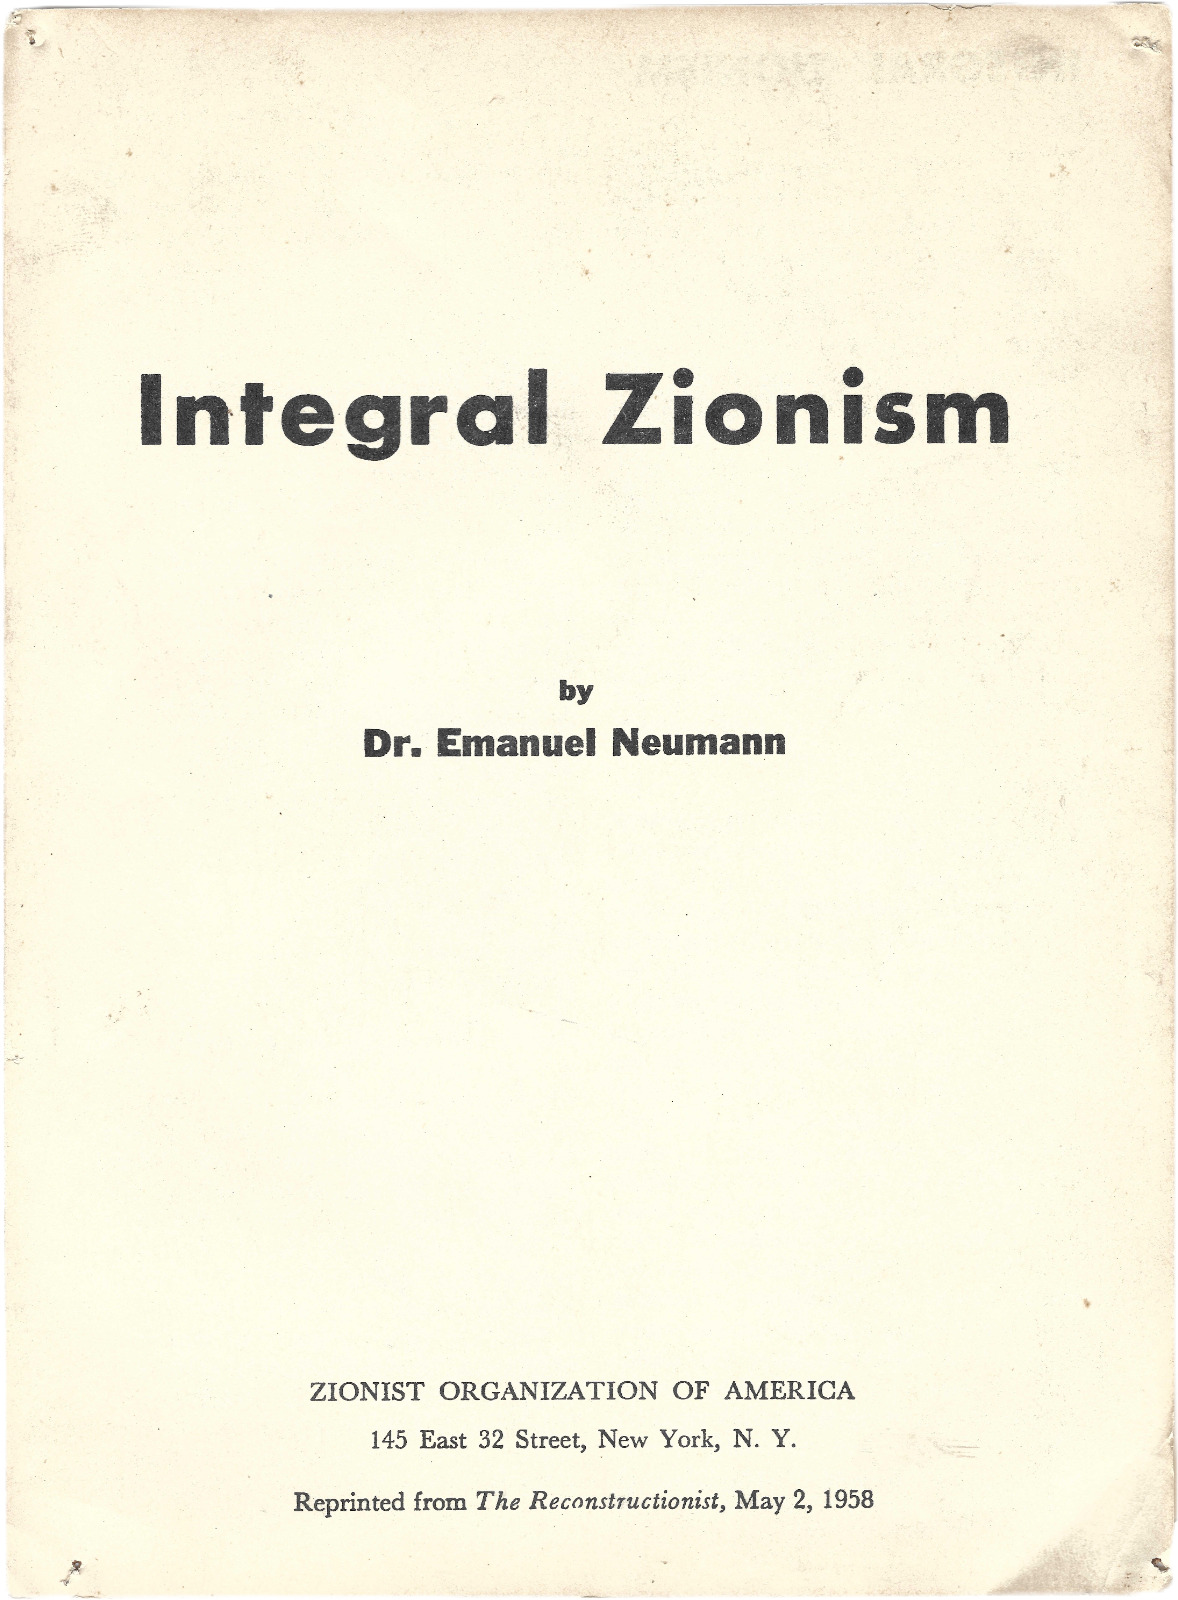 Integral Zionism by Dr. Emanuel Neumann ZOA ZIONIST ORGANIZATION OF AMERICA 1958